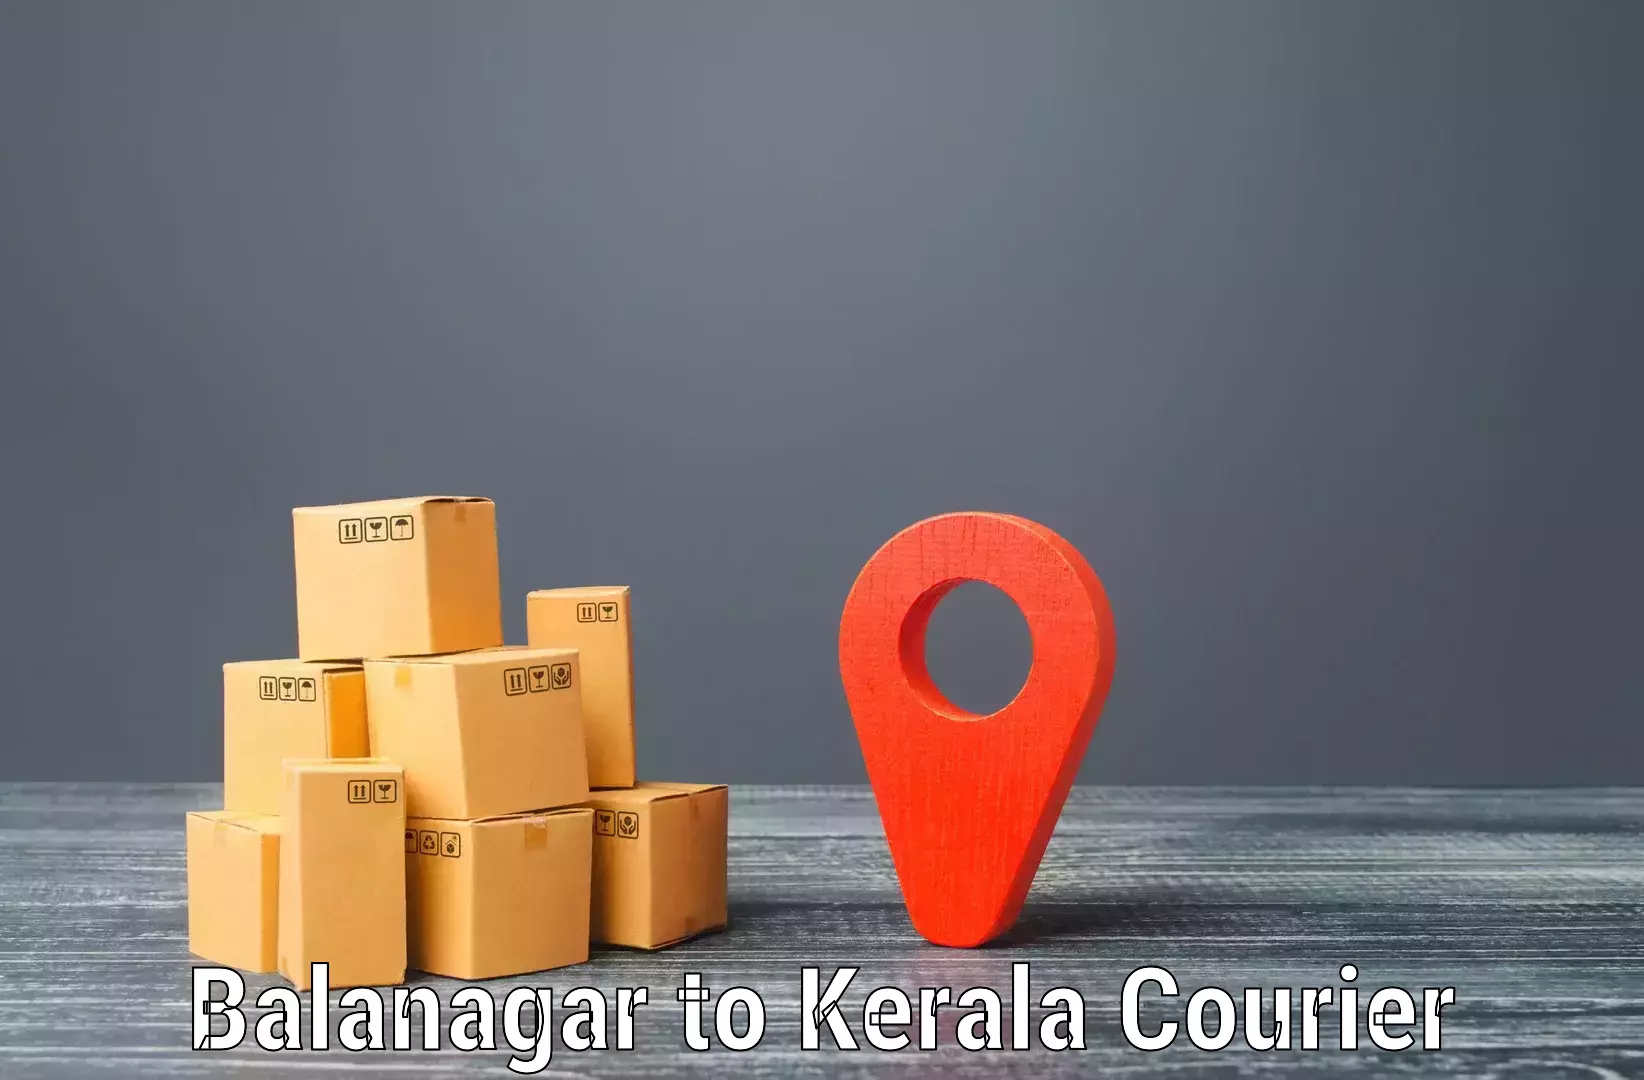 Package delivery network Balanagar to Kothamangalam